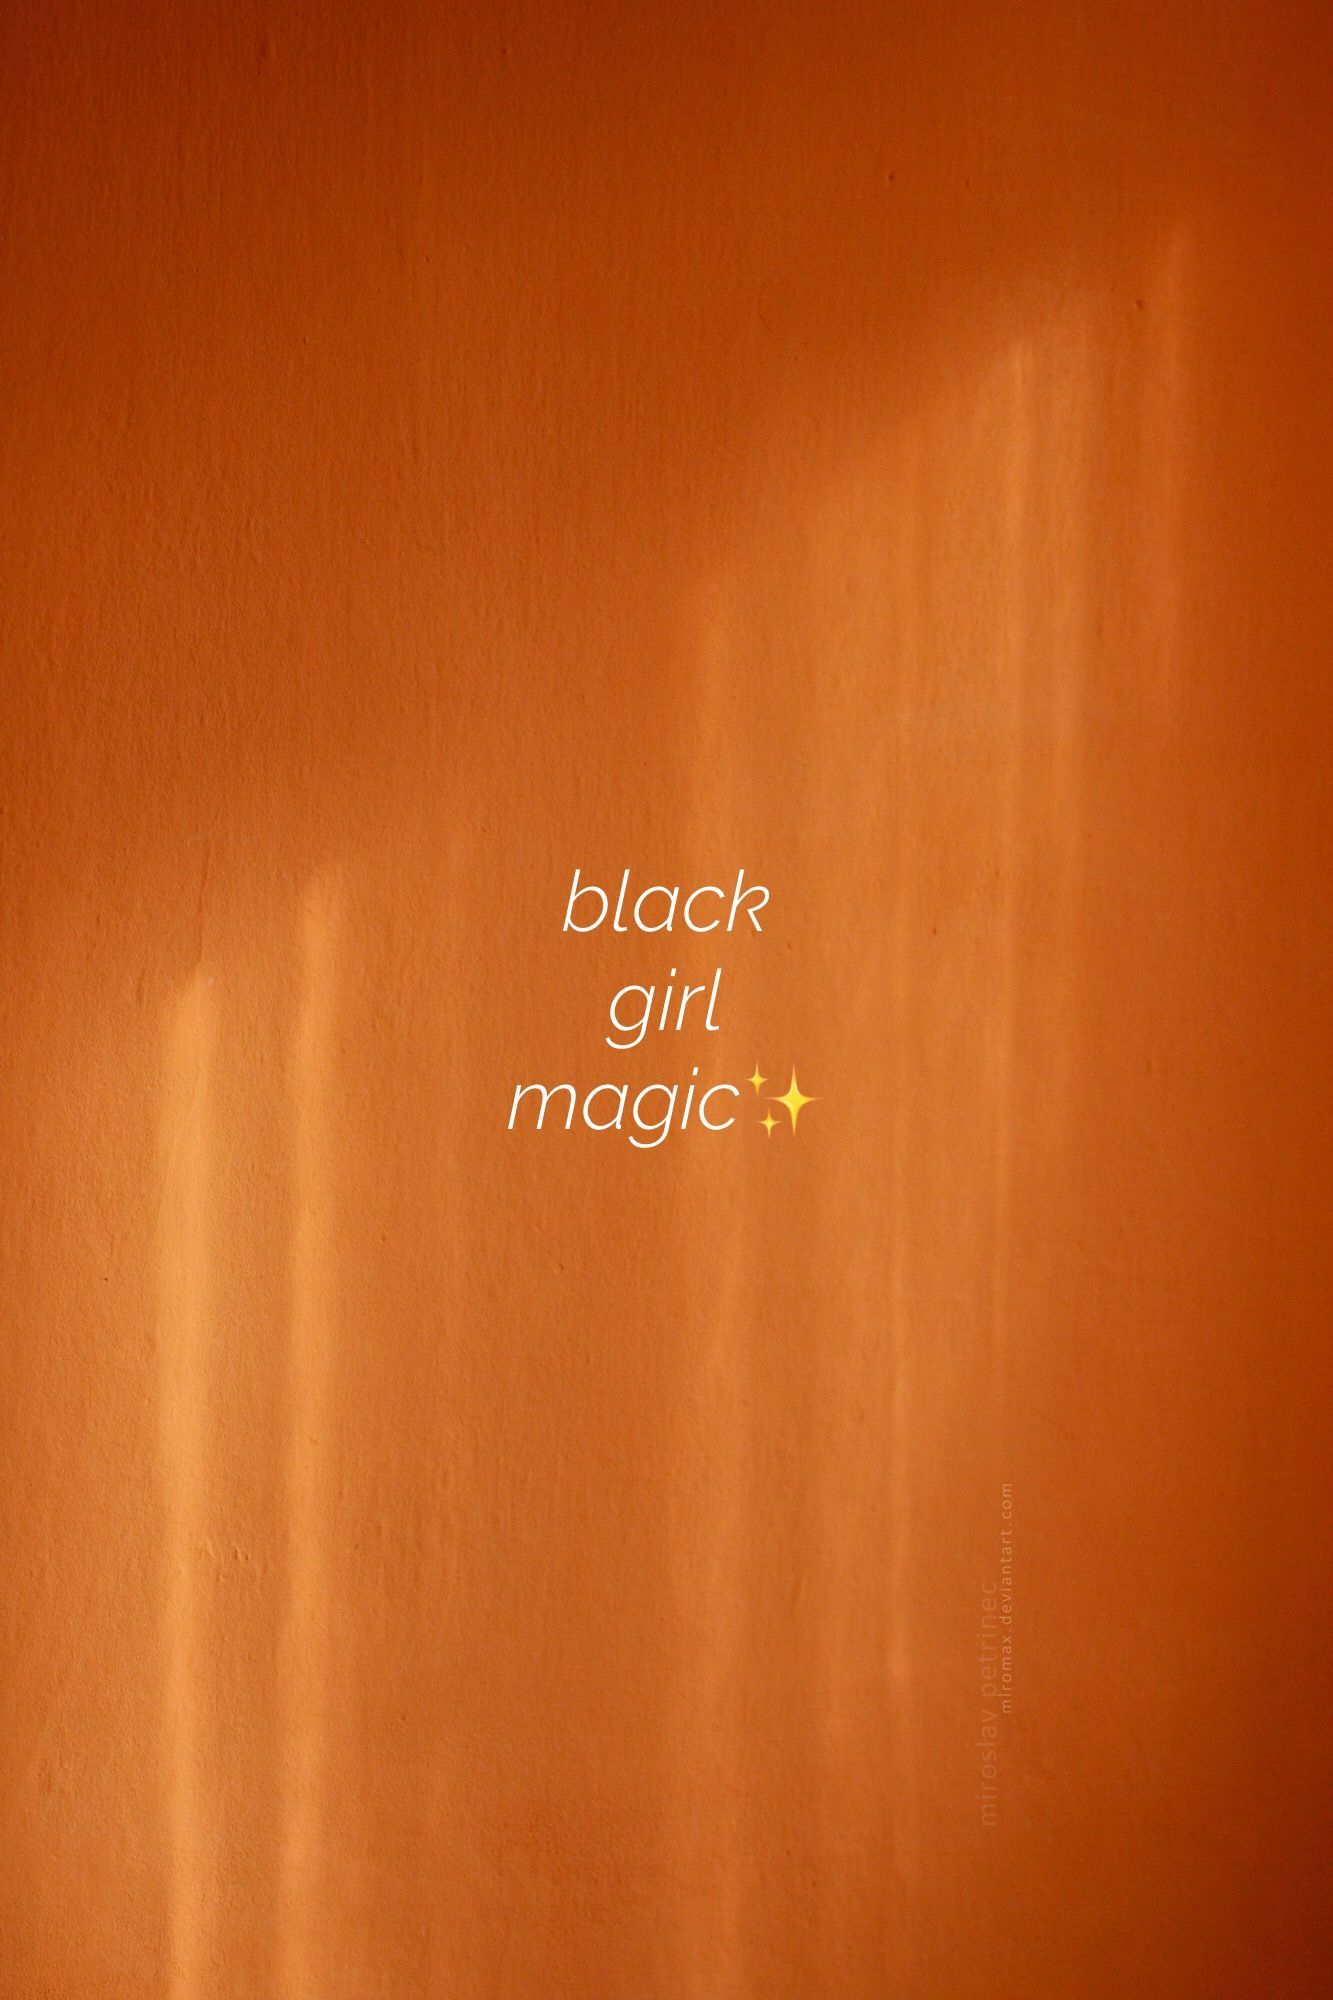 black girl magic✨ Made by me. Black girl magic, Black girl quotes, Magic aesthetic